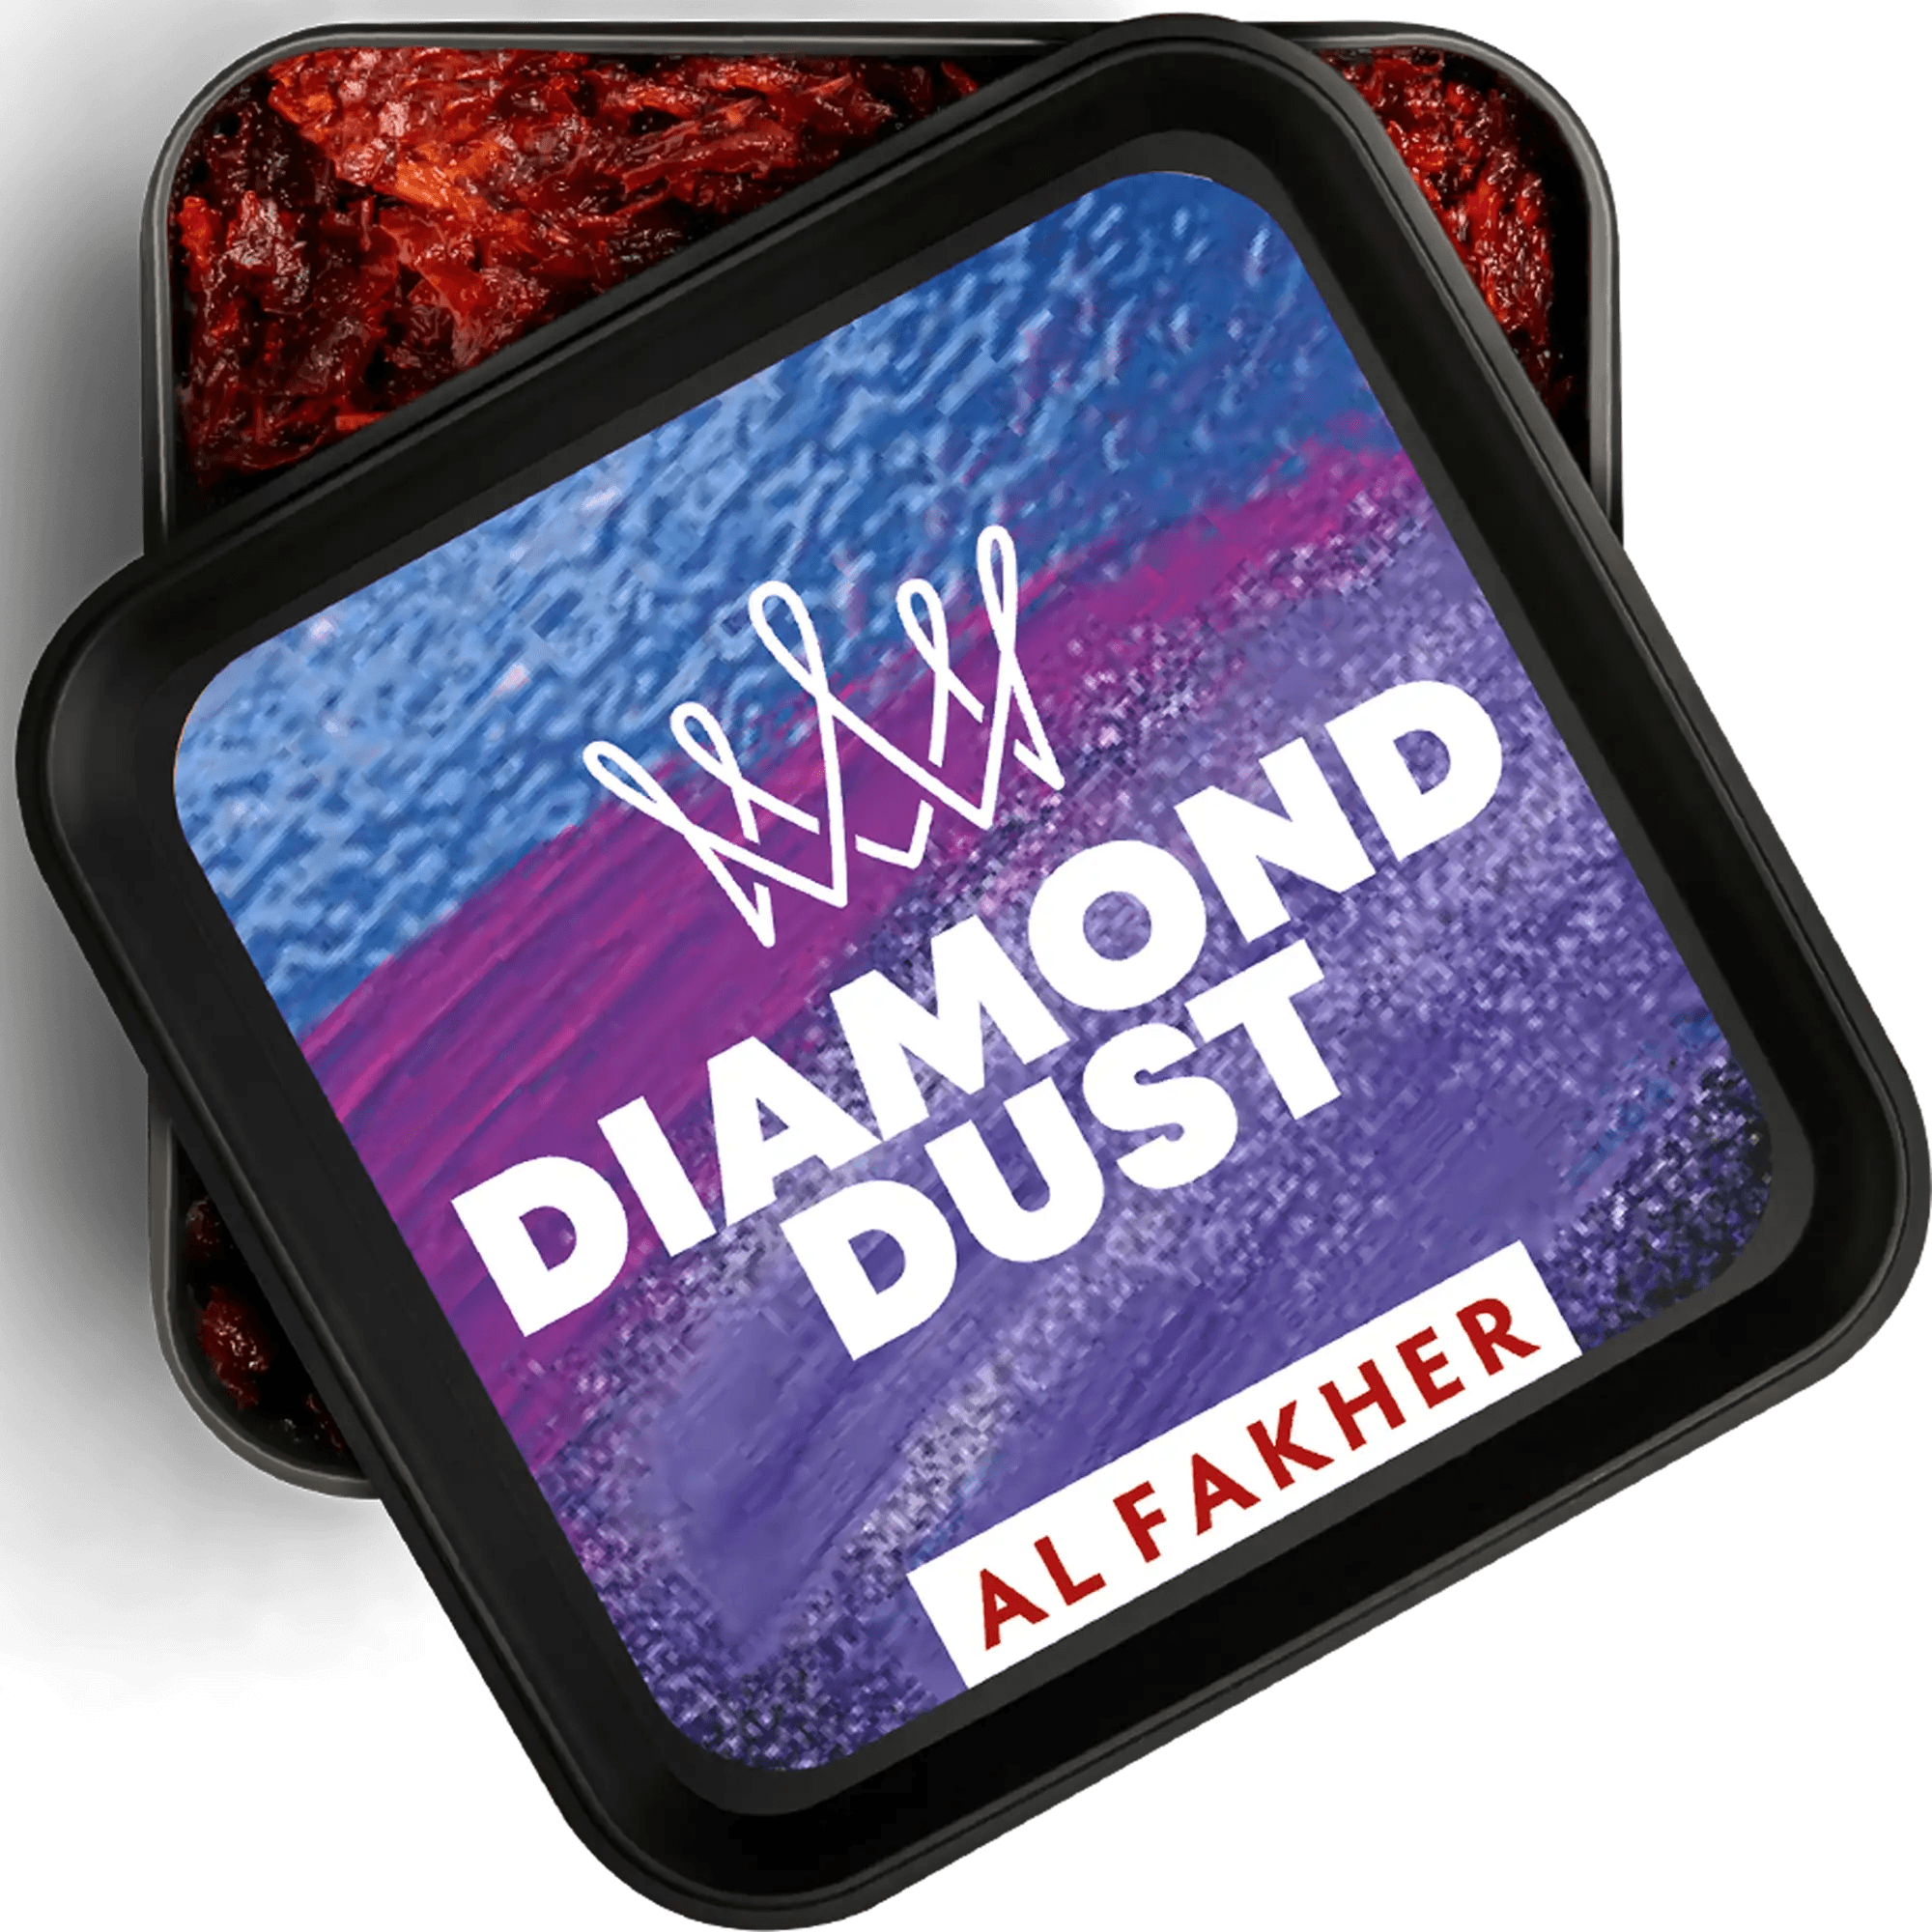 Al Fakher Shisha Tobacco Diamond Dust - Lavoo